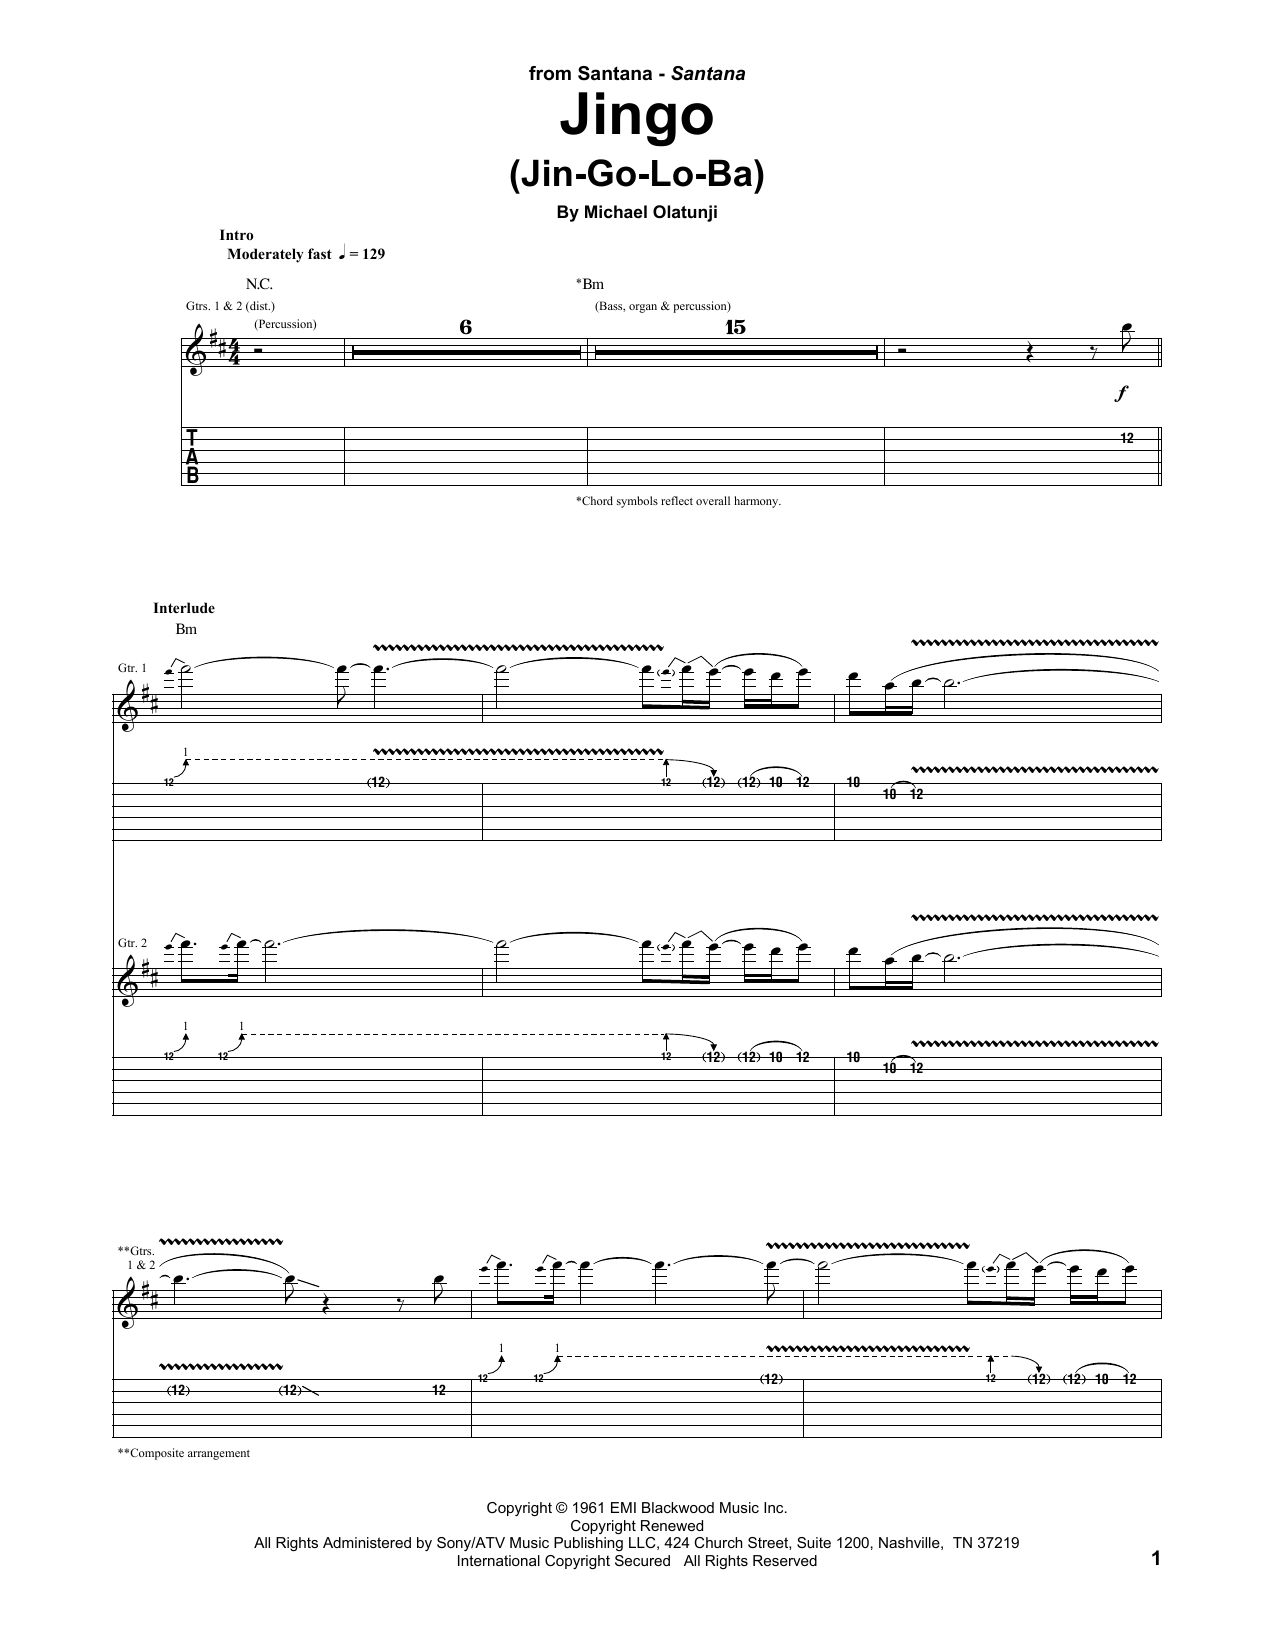 Santana Jingo (Jin-Go-Lo-Ba) Sheet Music Notes & Chords for Guitar Tab - Download or Print PDF